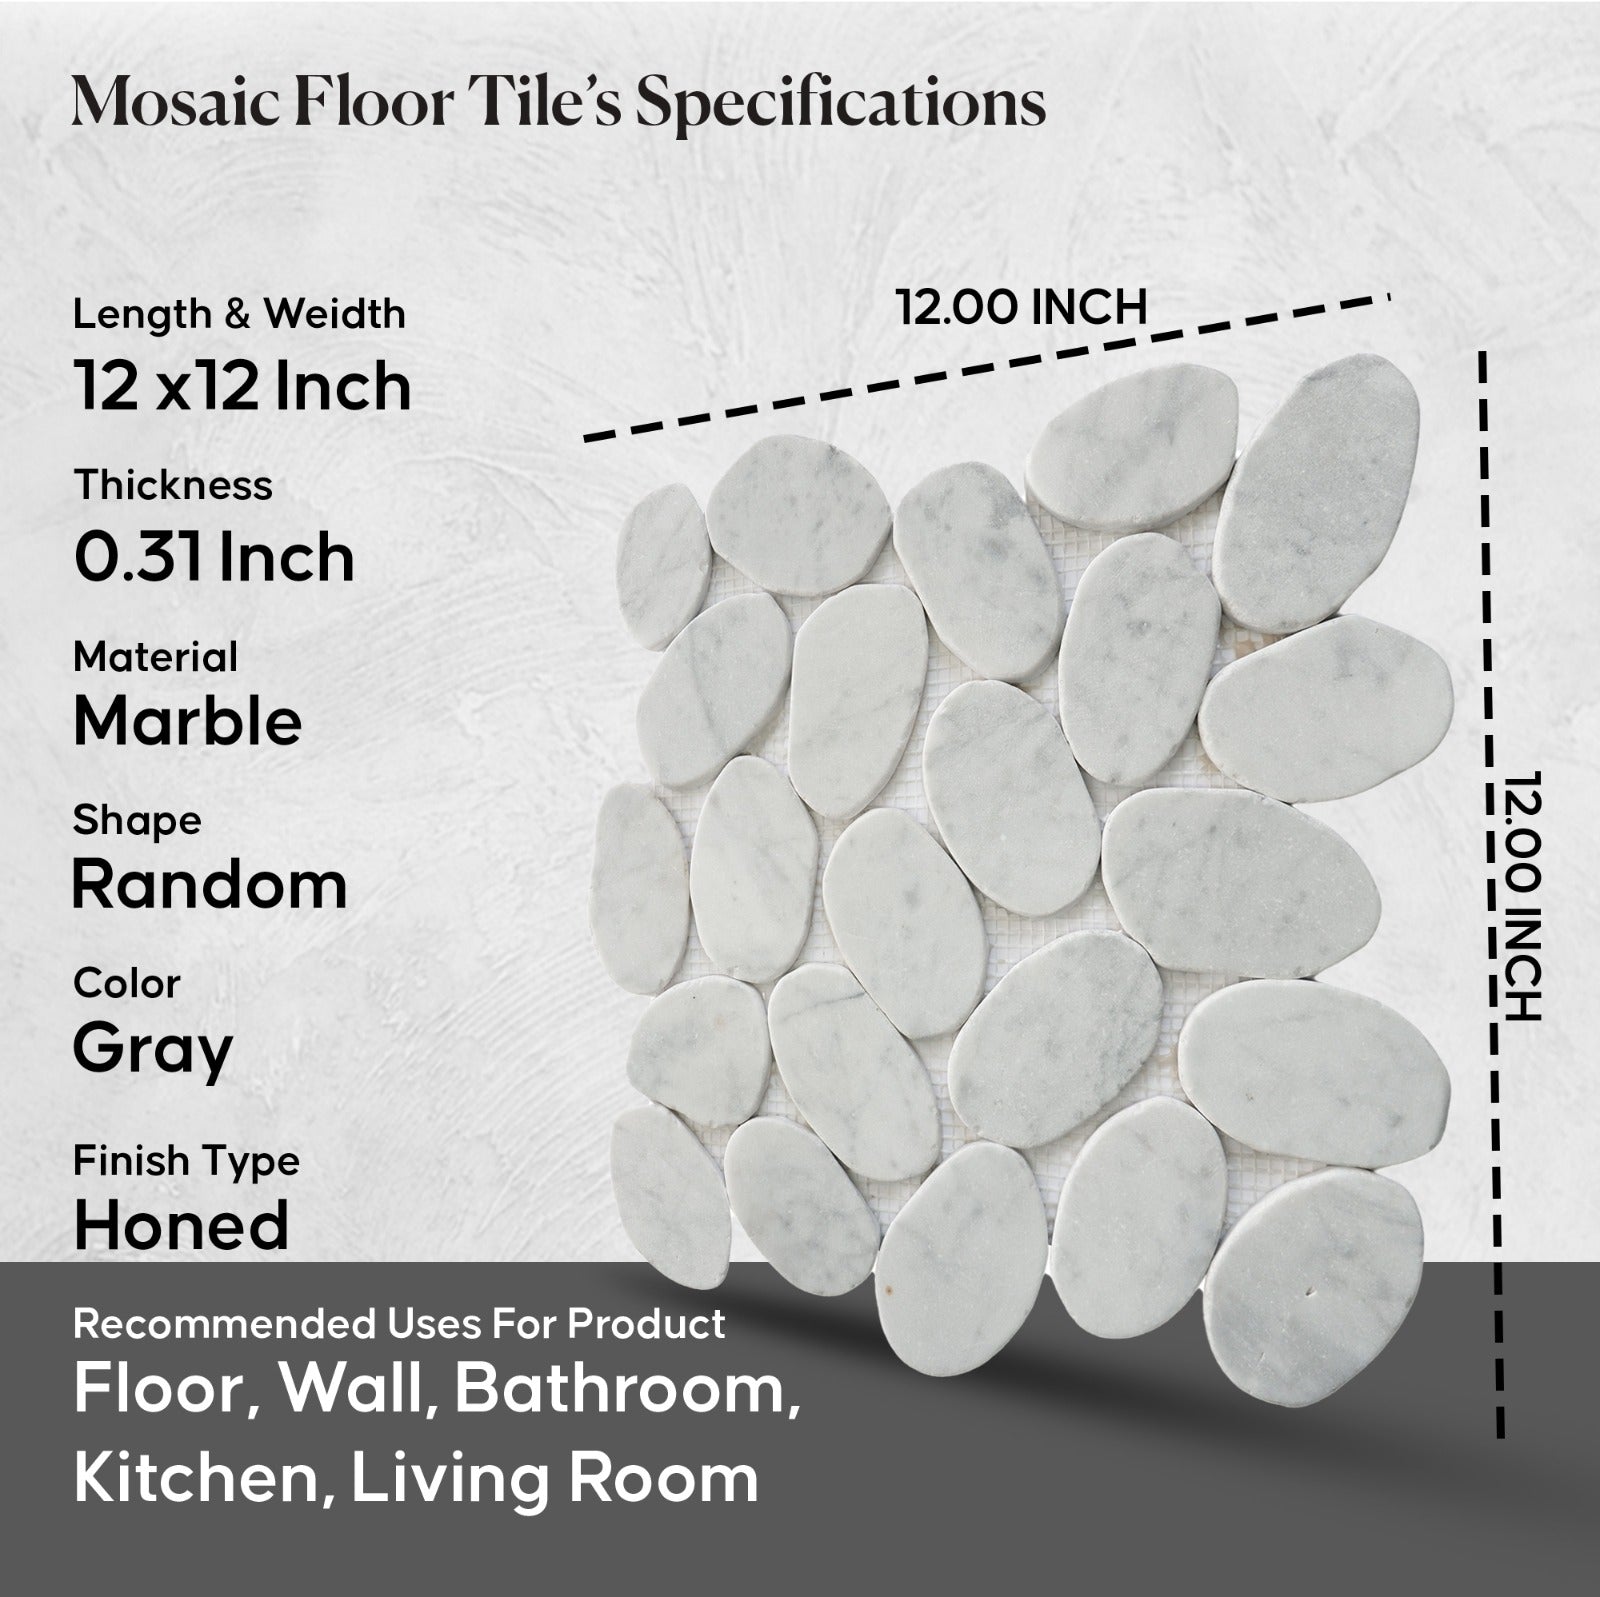 White Marble Mosaic Tile, XL SLICE CARRARA Mosaic Wall & Floor Tile